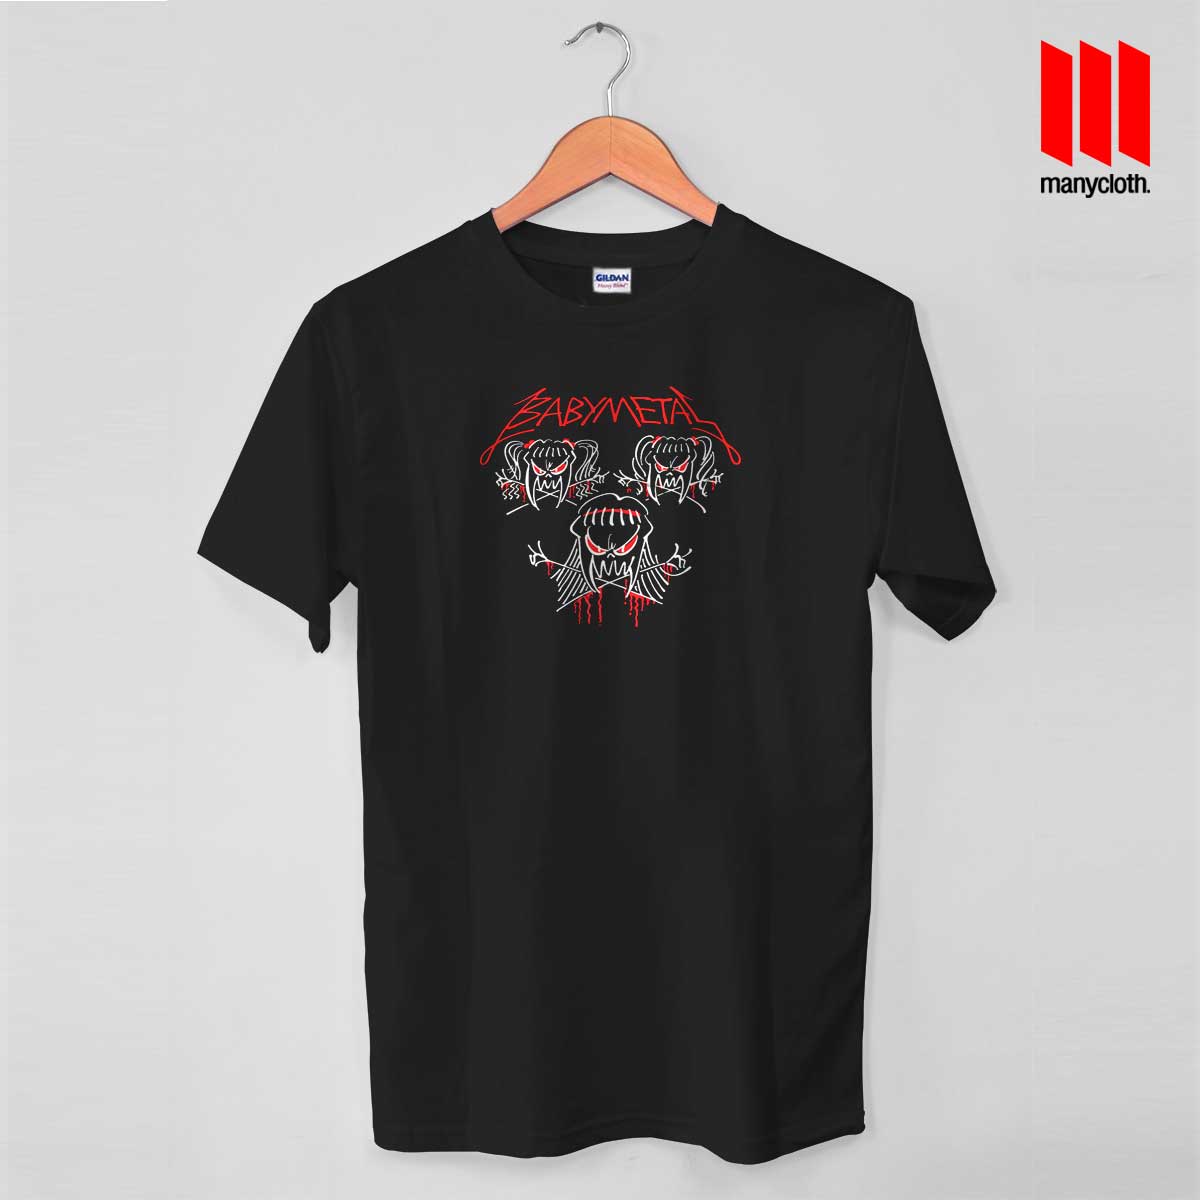 Babymetal Tour T Shirt by ManyCloth chep